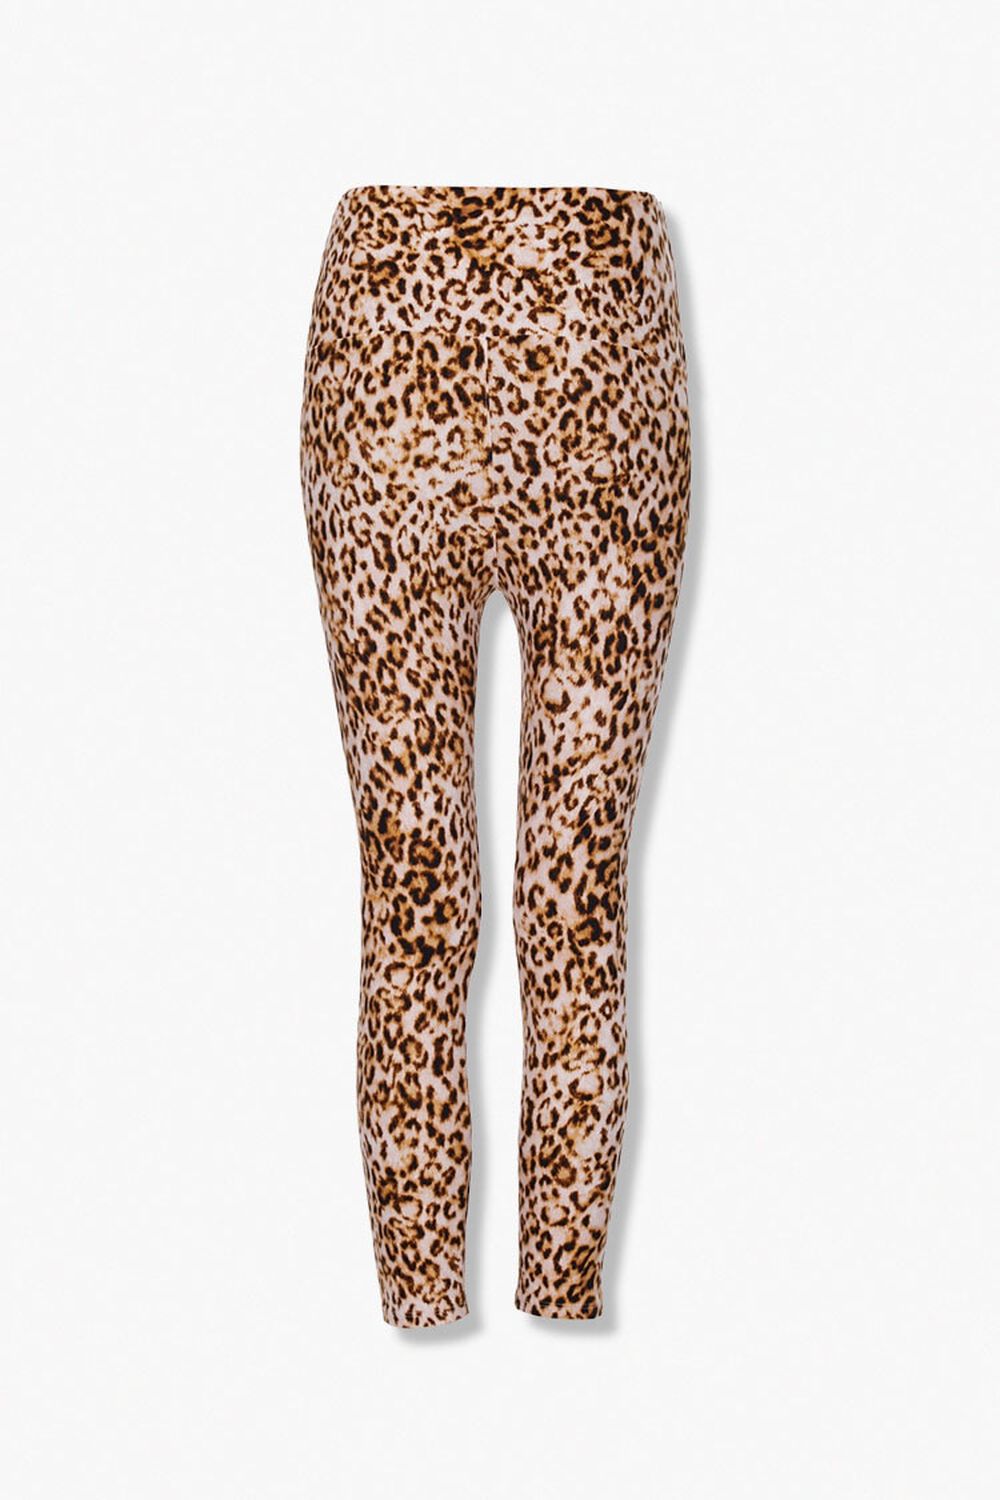 BROWN/MULTI Leopard Print Skinny Pants, image 3